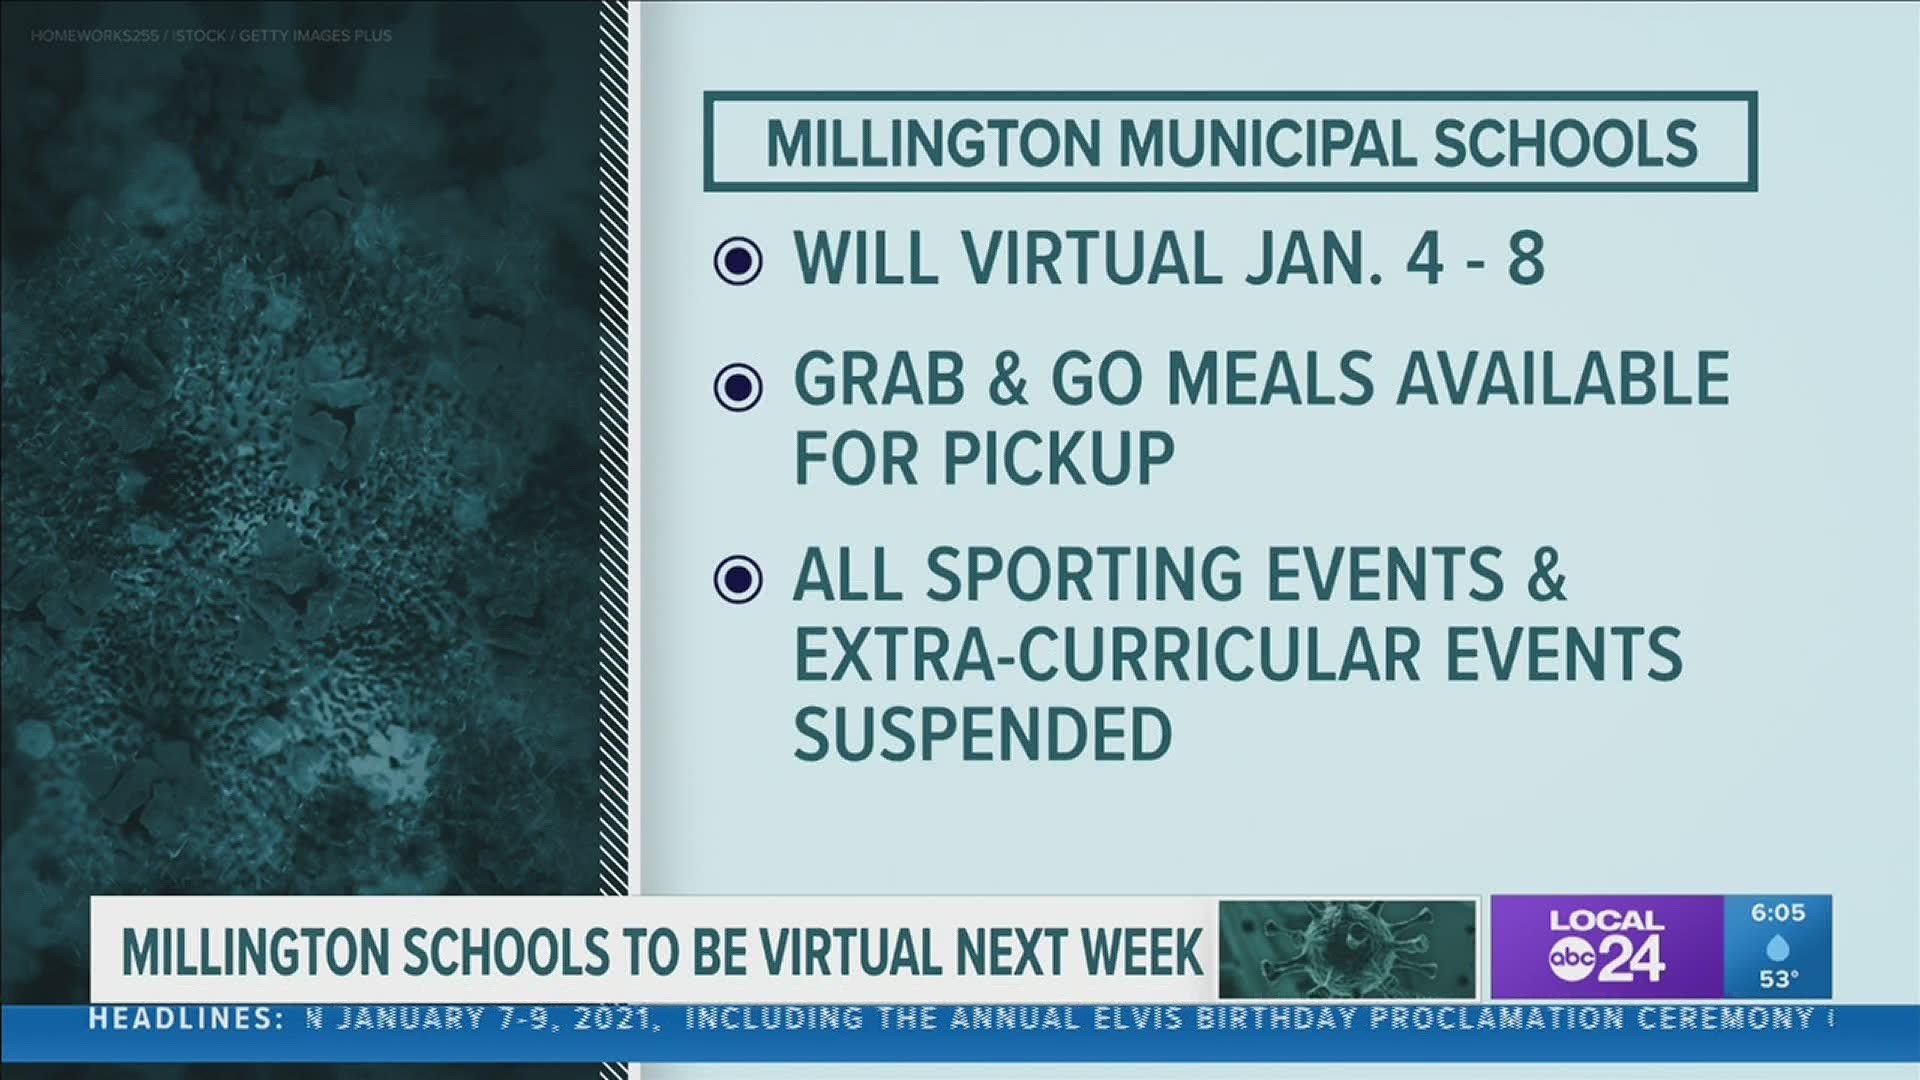 Millington Municipal Schools start spring semester virtual the first week of January